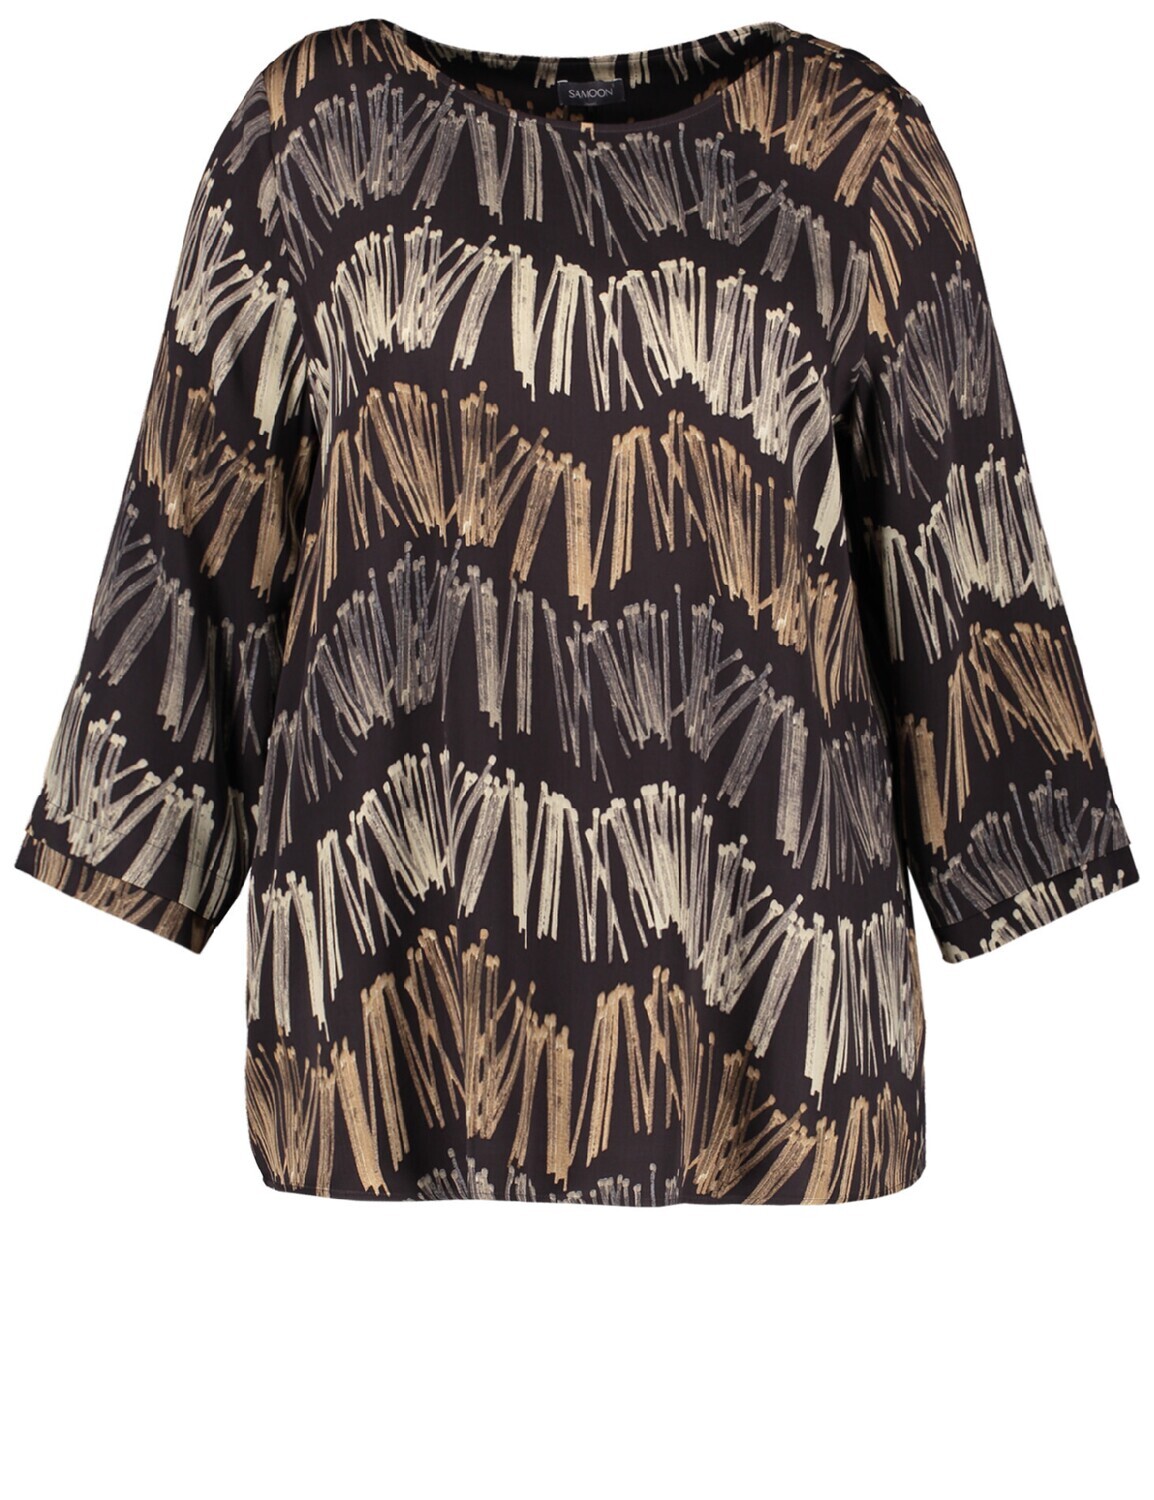 Samoon blouse print 360226-21233, Size: 44